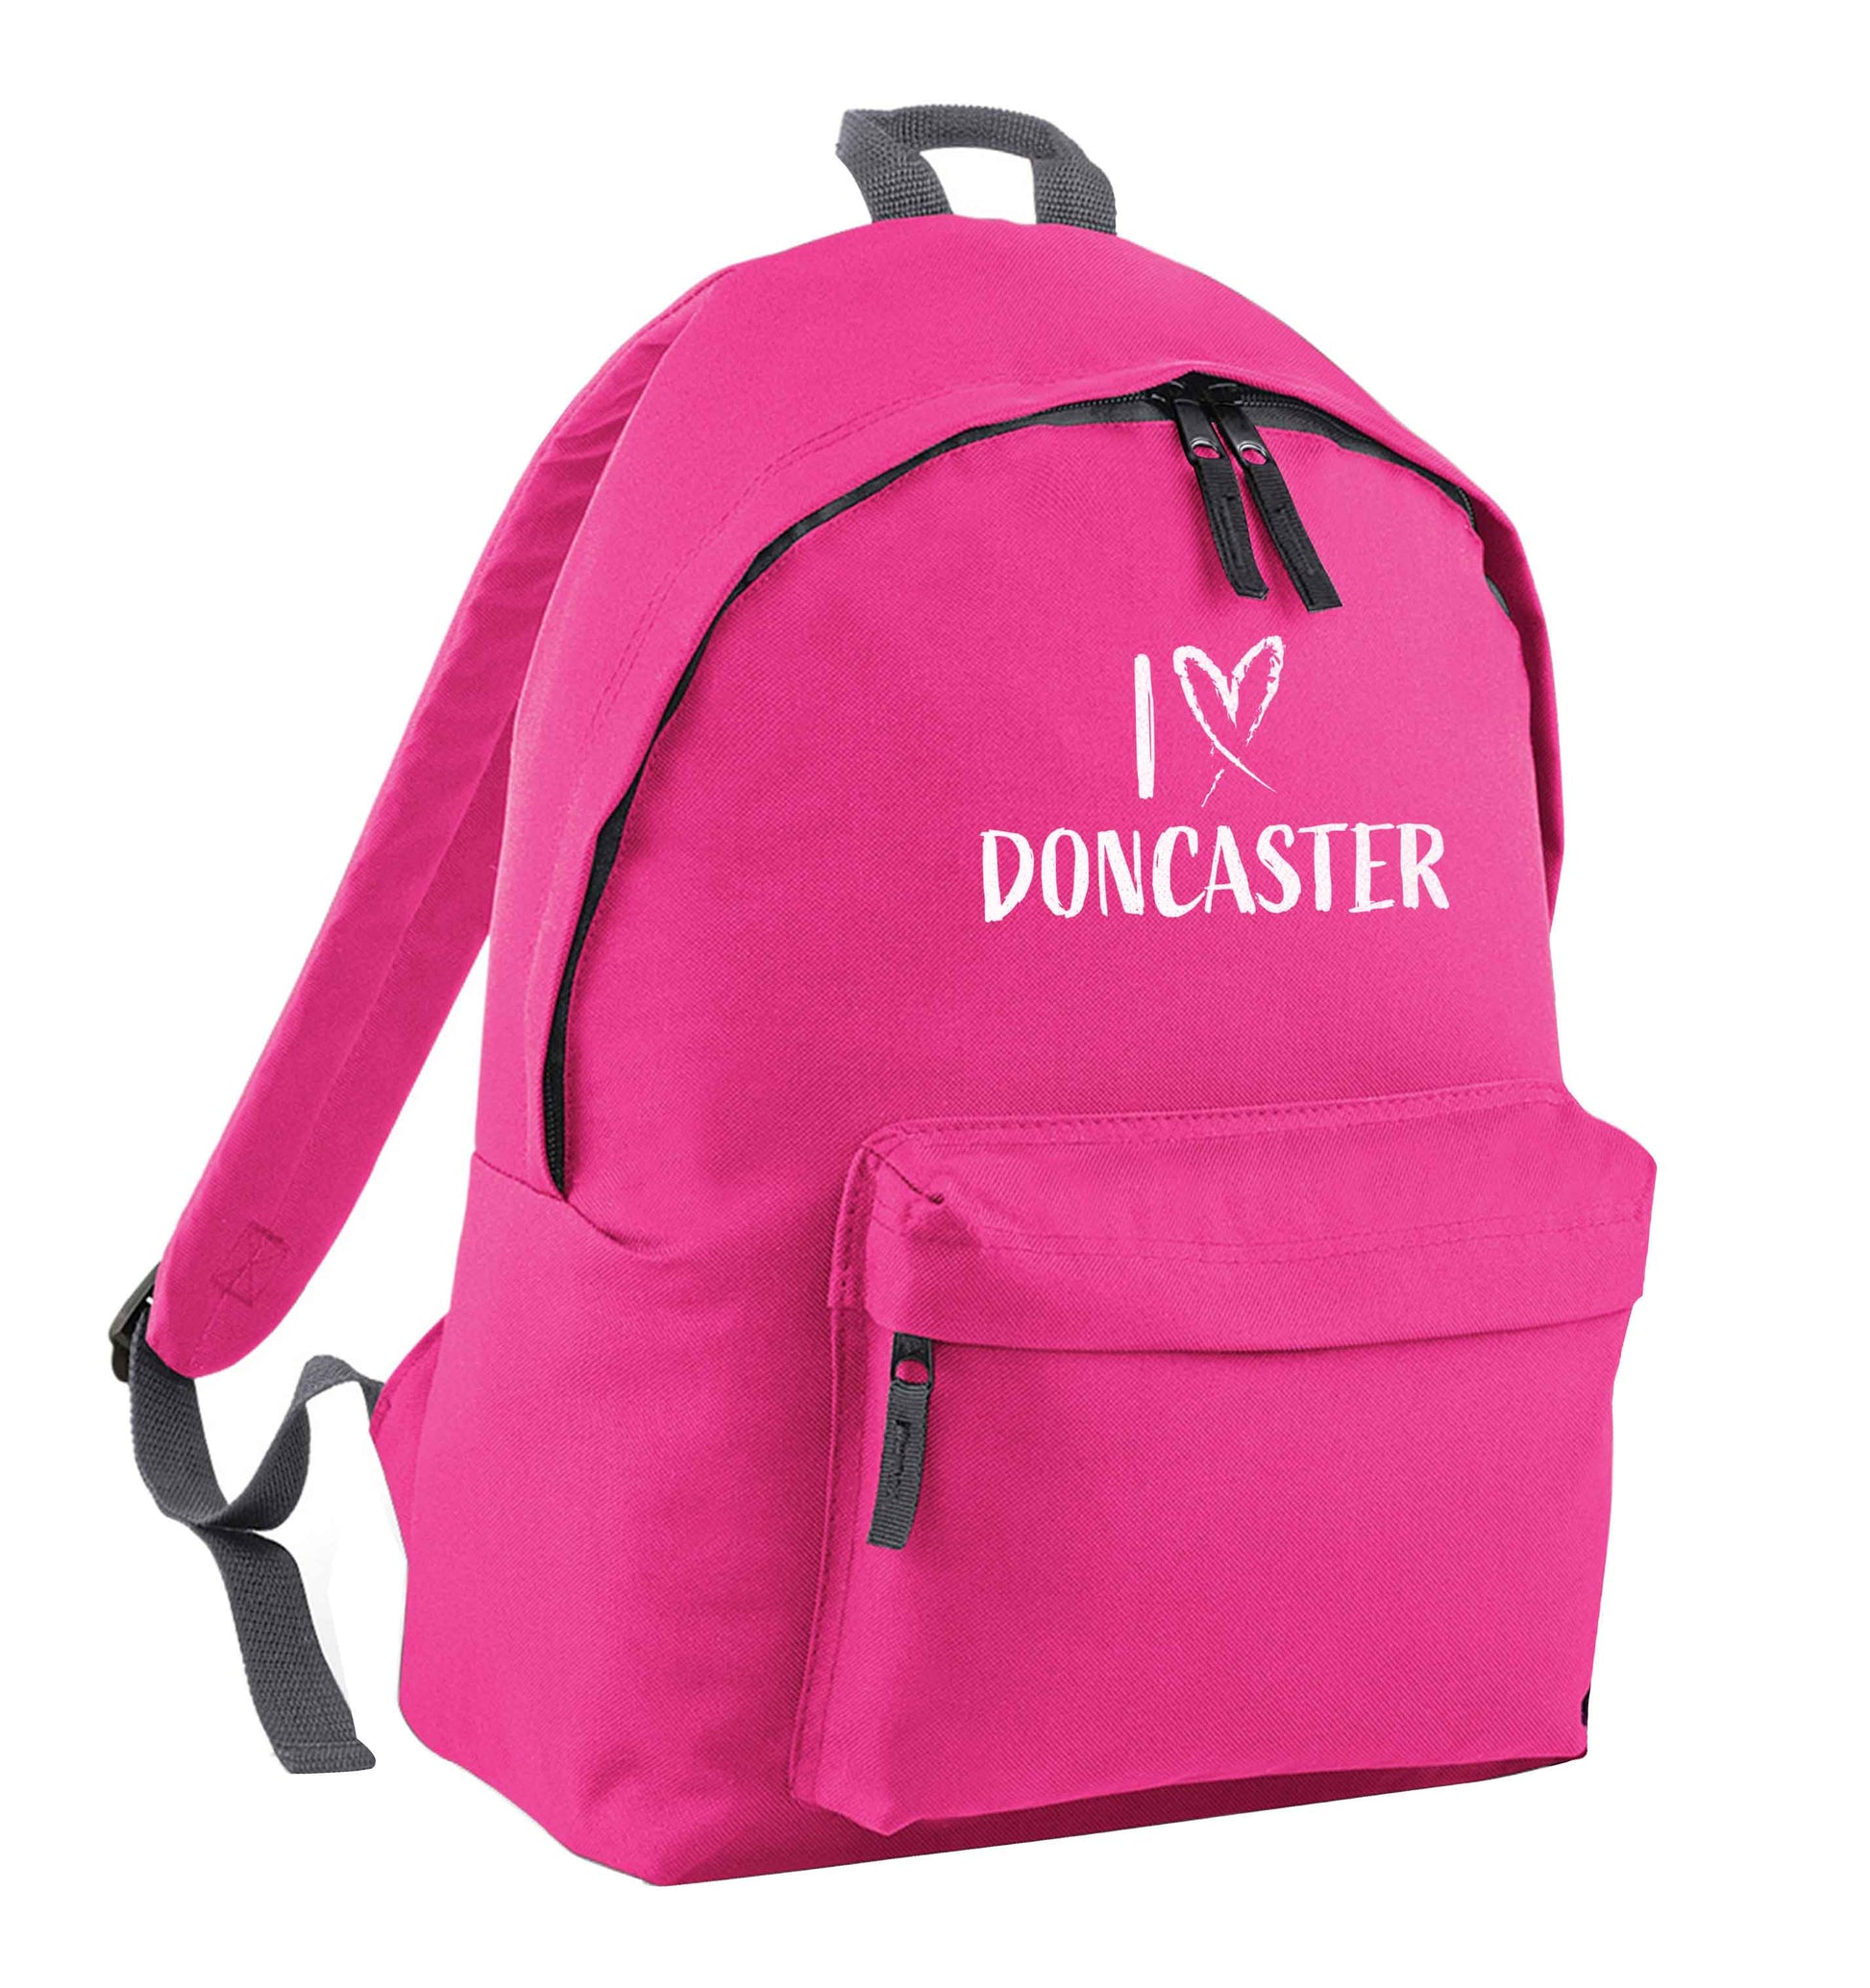 I love Doncaster pink adults backpack